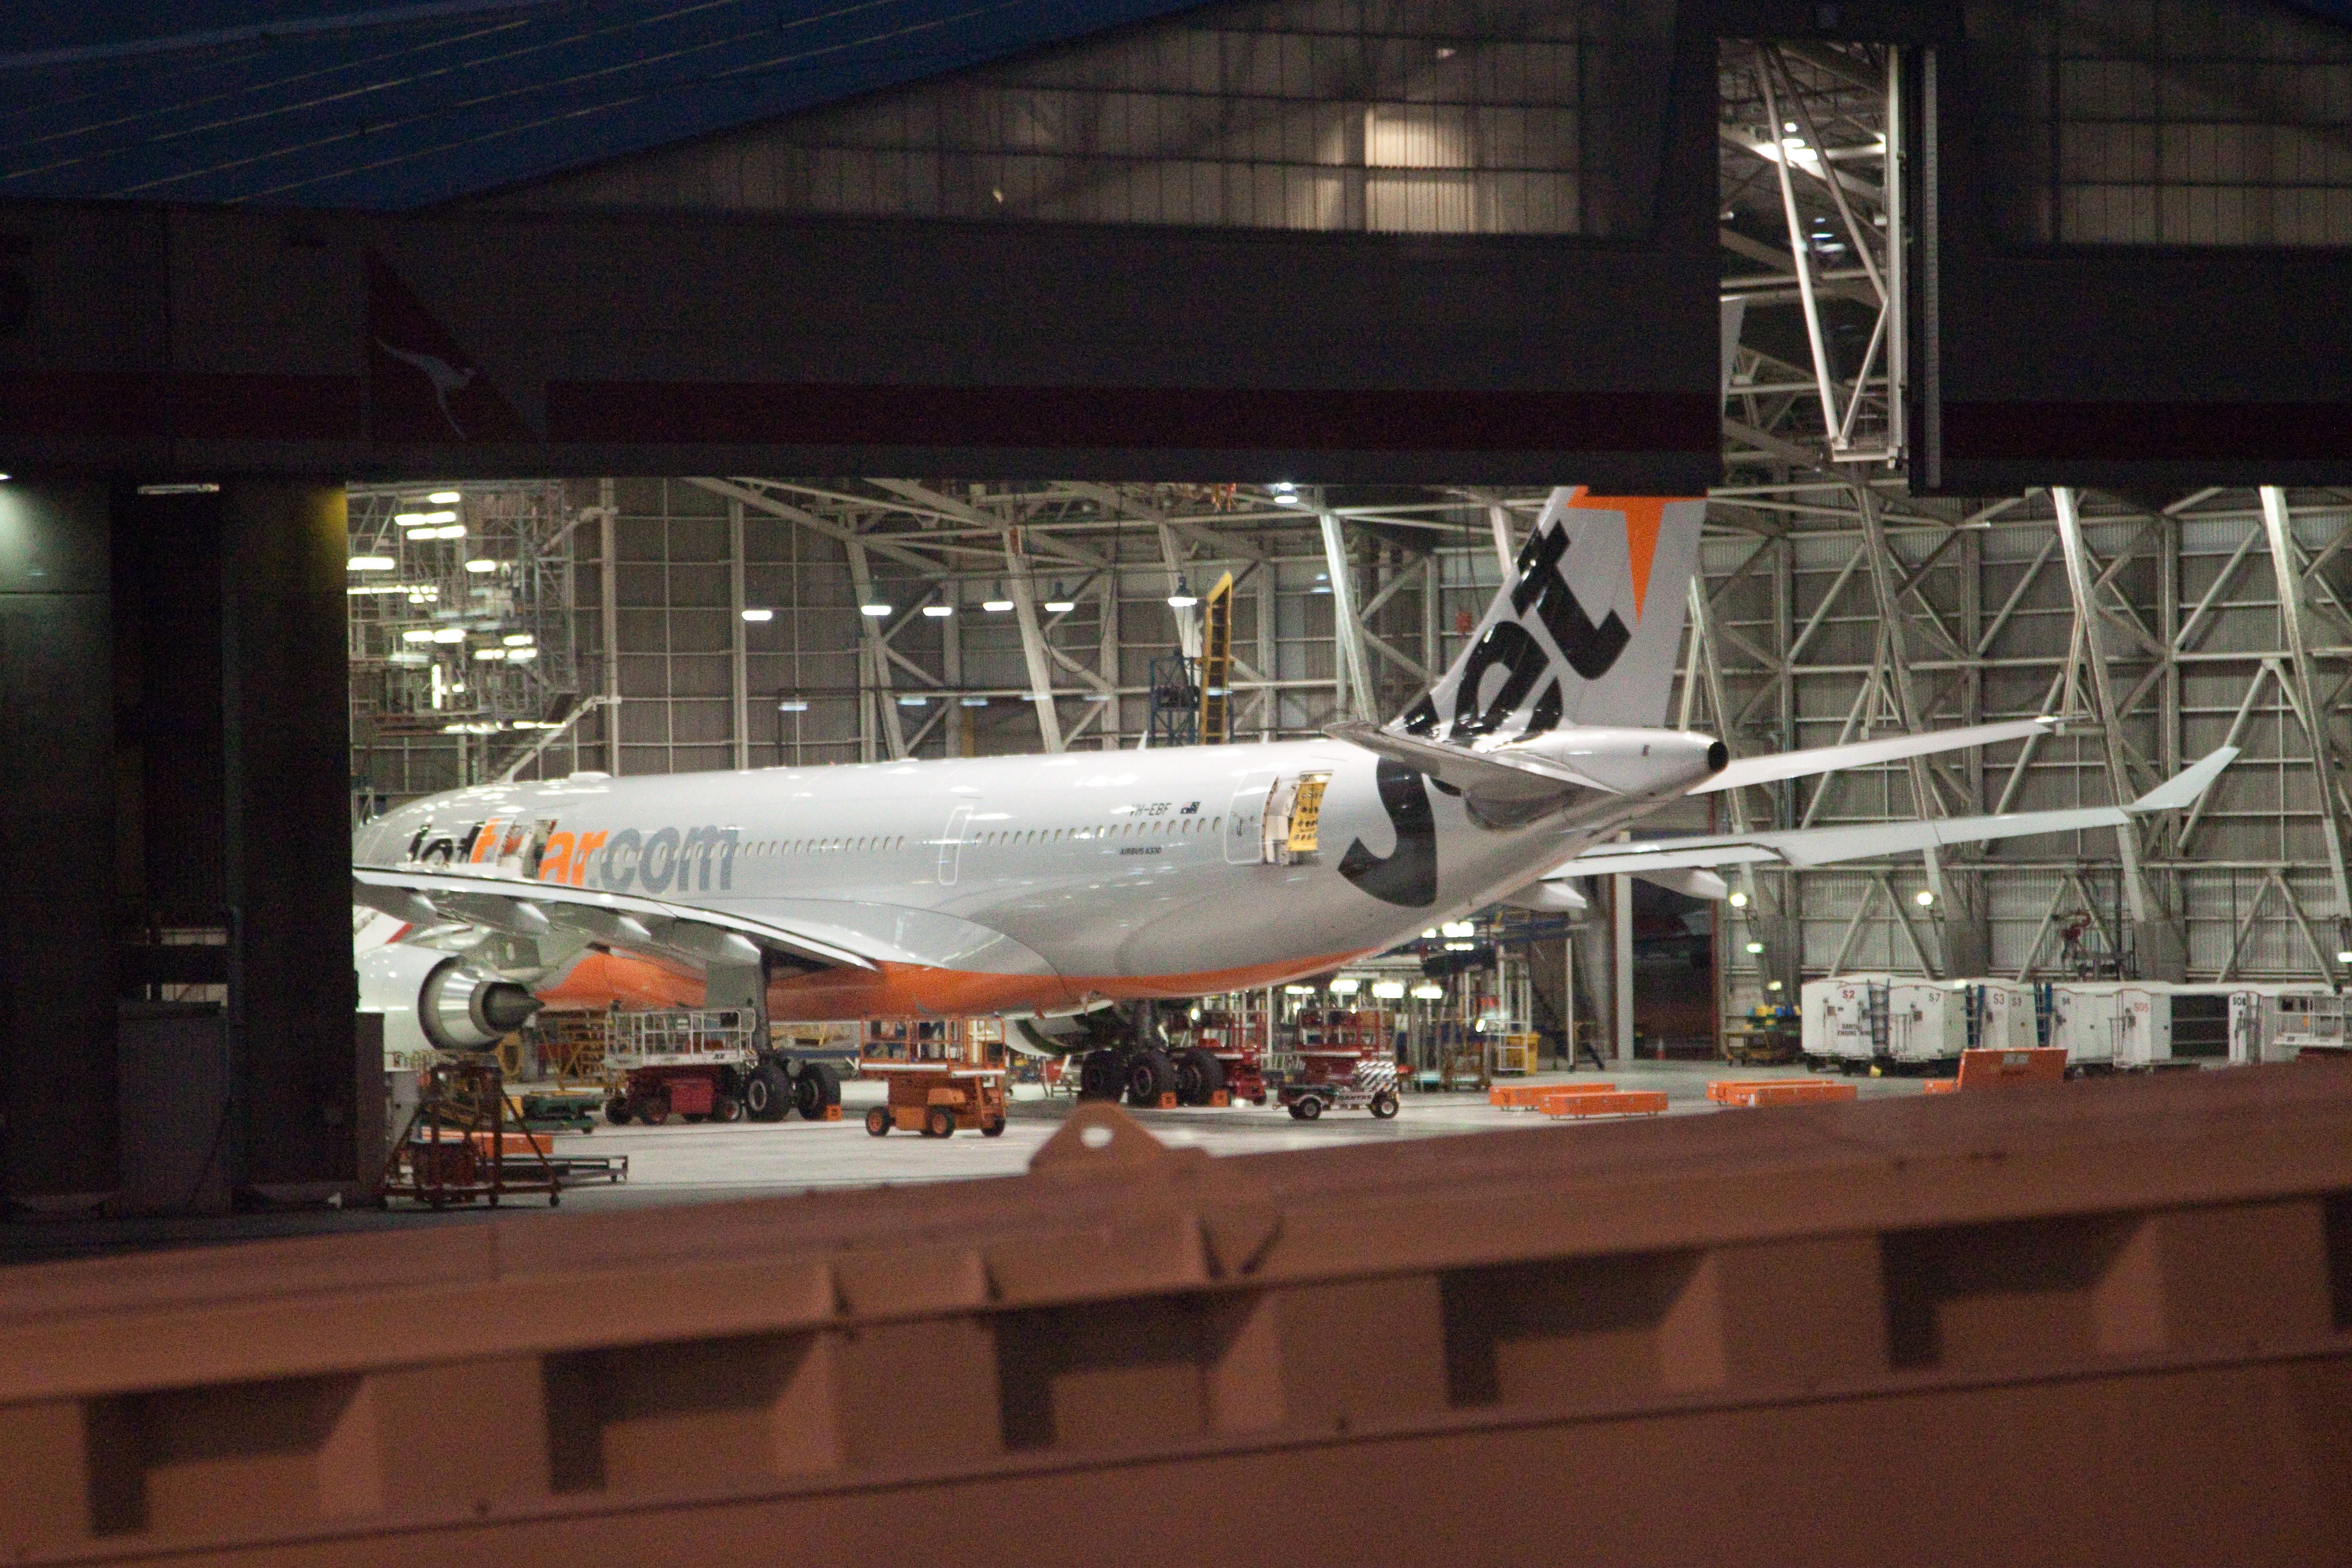 A Jetstar Airbus A330 undergoing maintenance in a hangar at Sydney Airport.